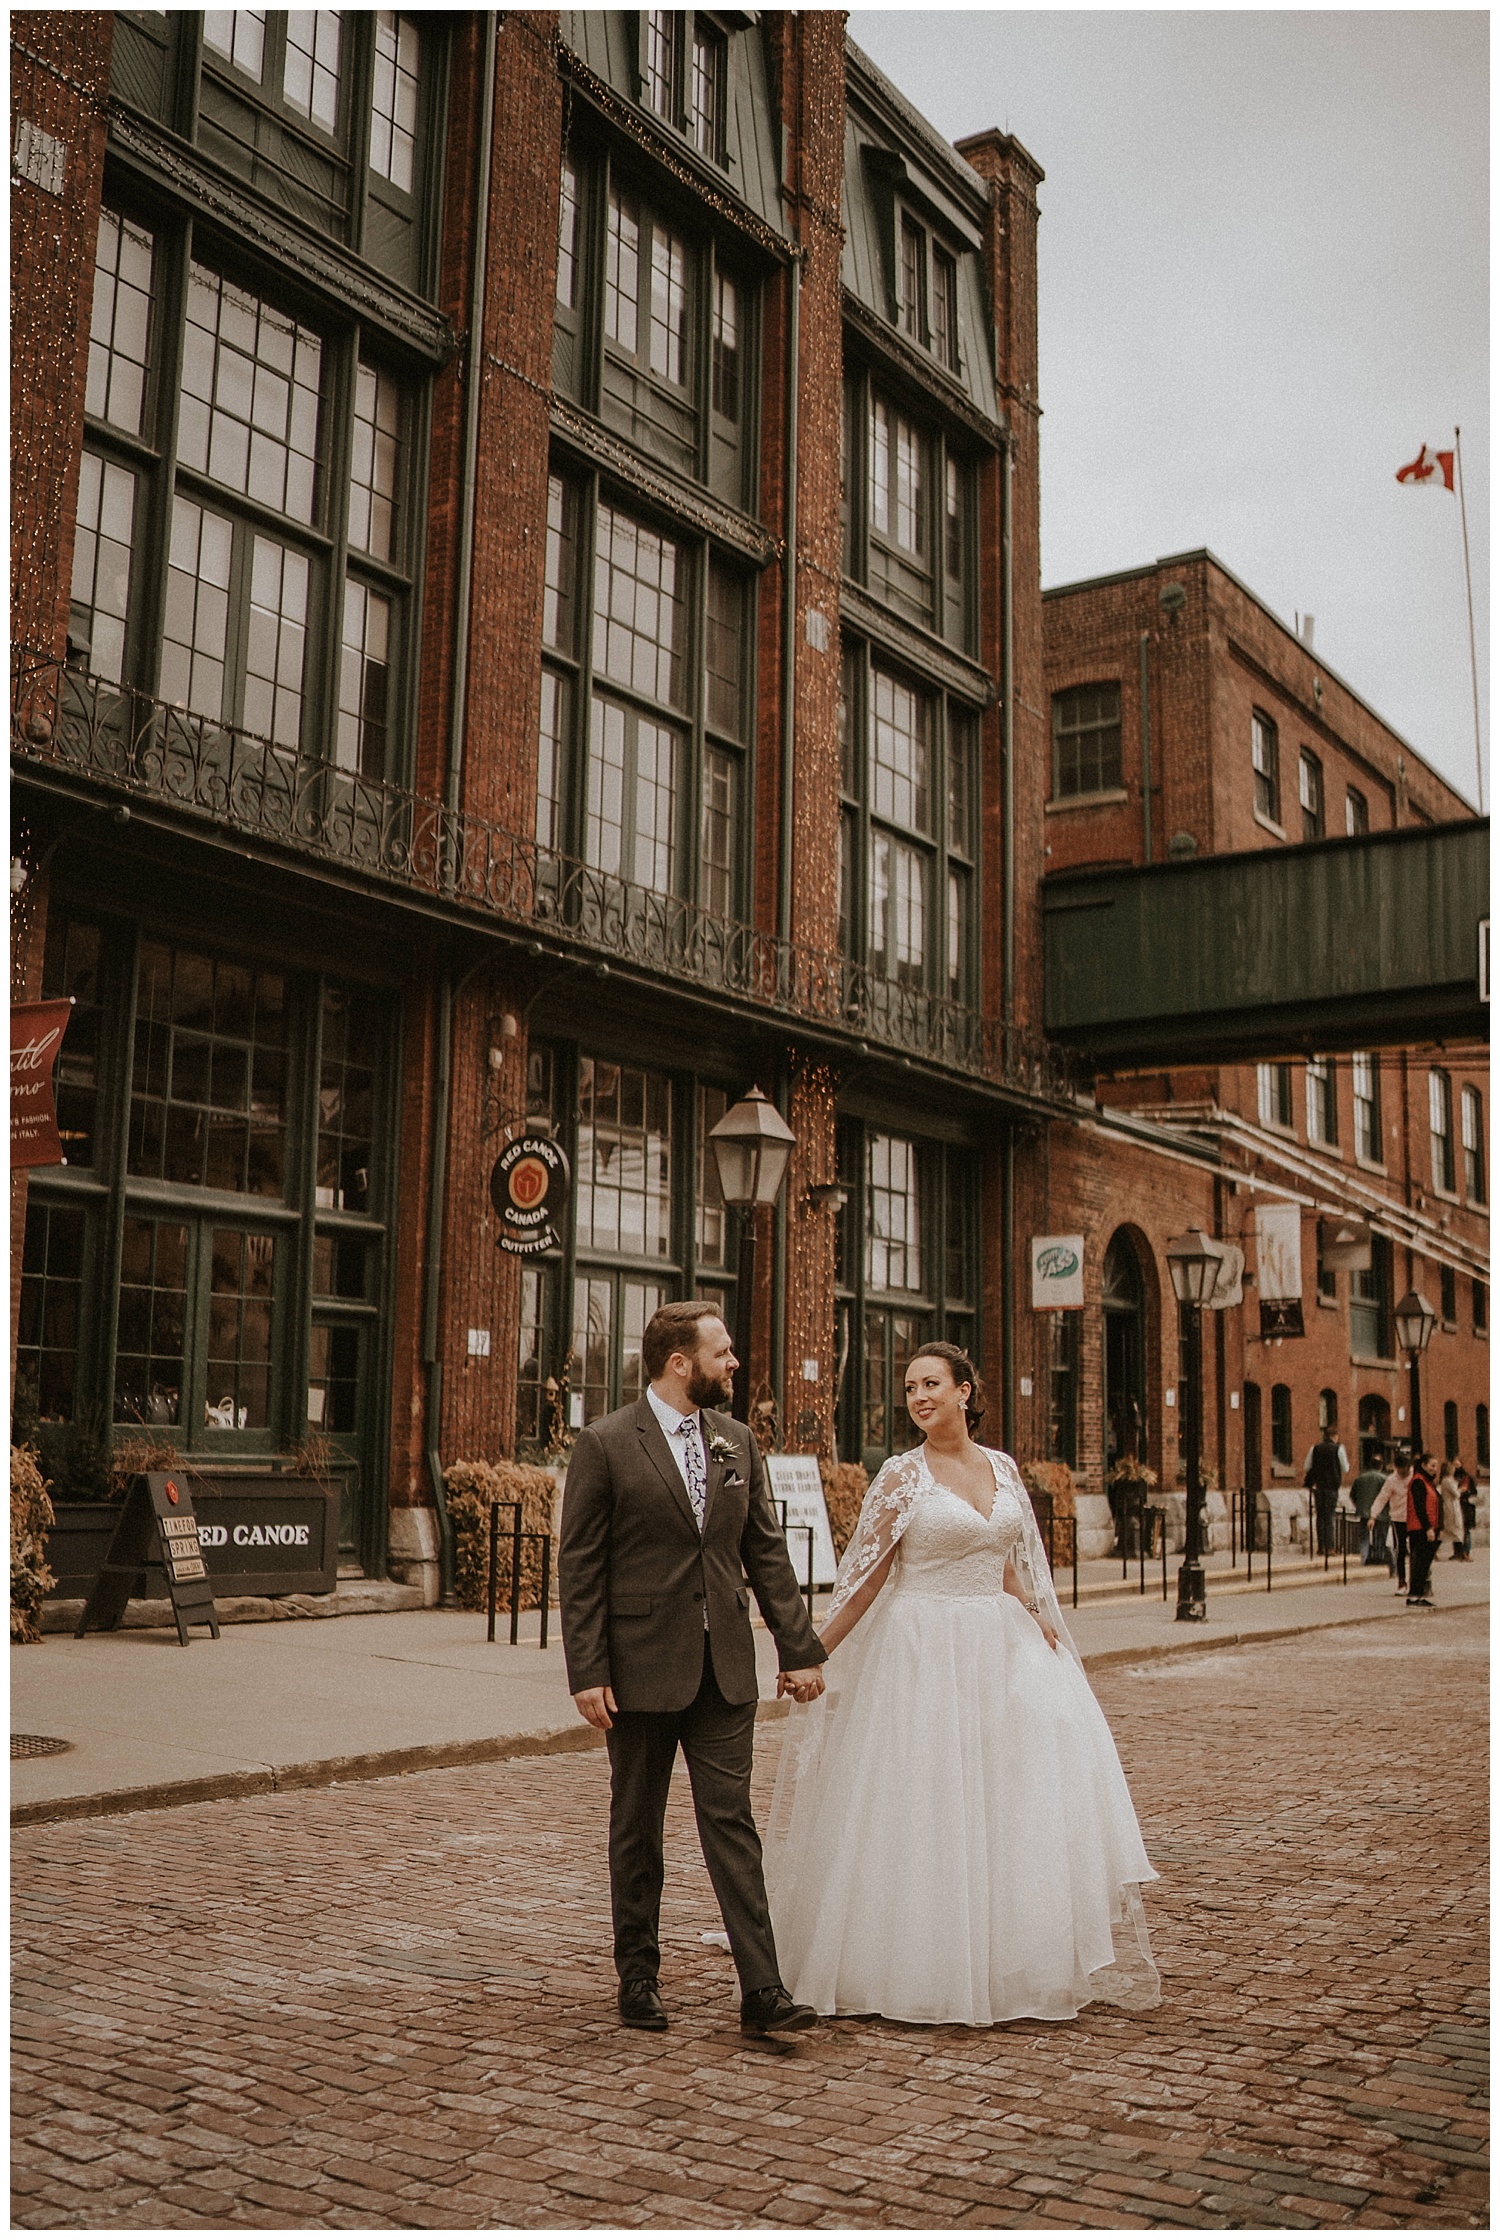 Katie Marie Photography | Archeo Wedding Arta Gallery Wedding | Distillery District Wedding | Toronto Wedding Photographer | Hamilton Toronto Ontario Wedding Photographer |_0077.jpg